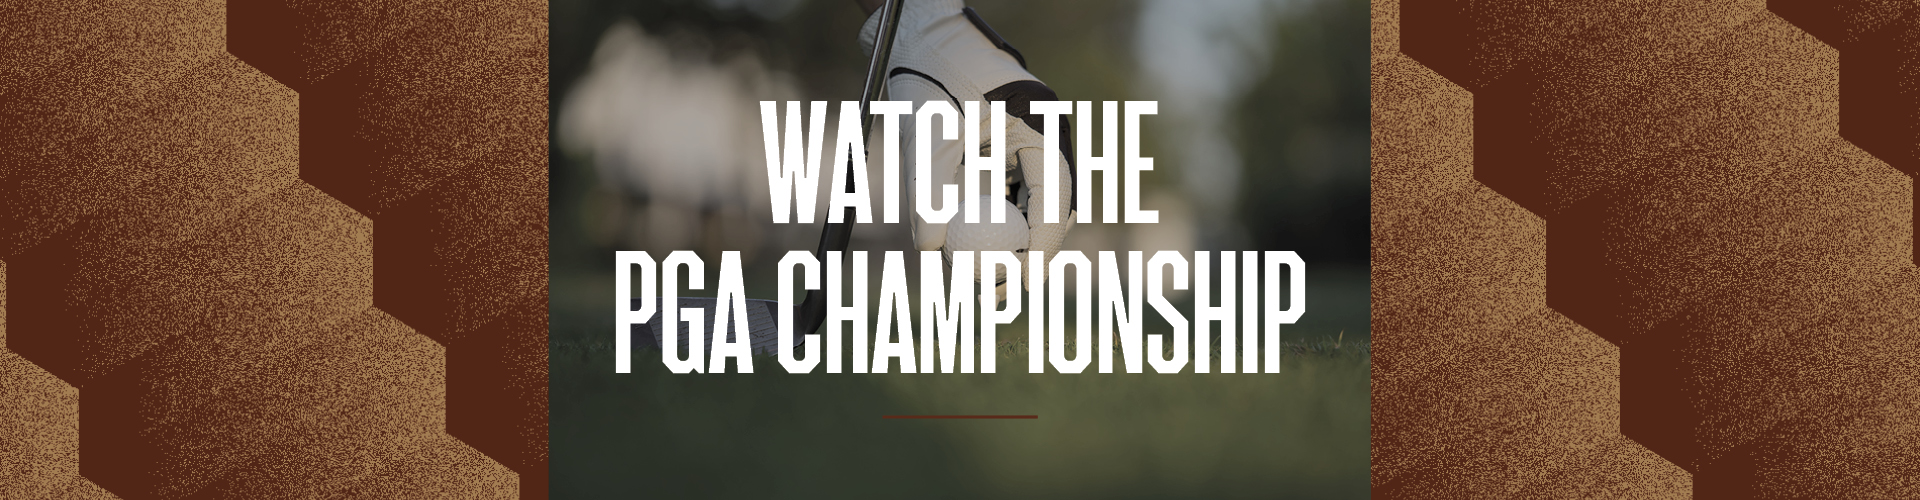 PGA Championship in Soho